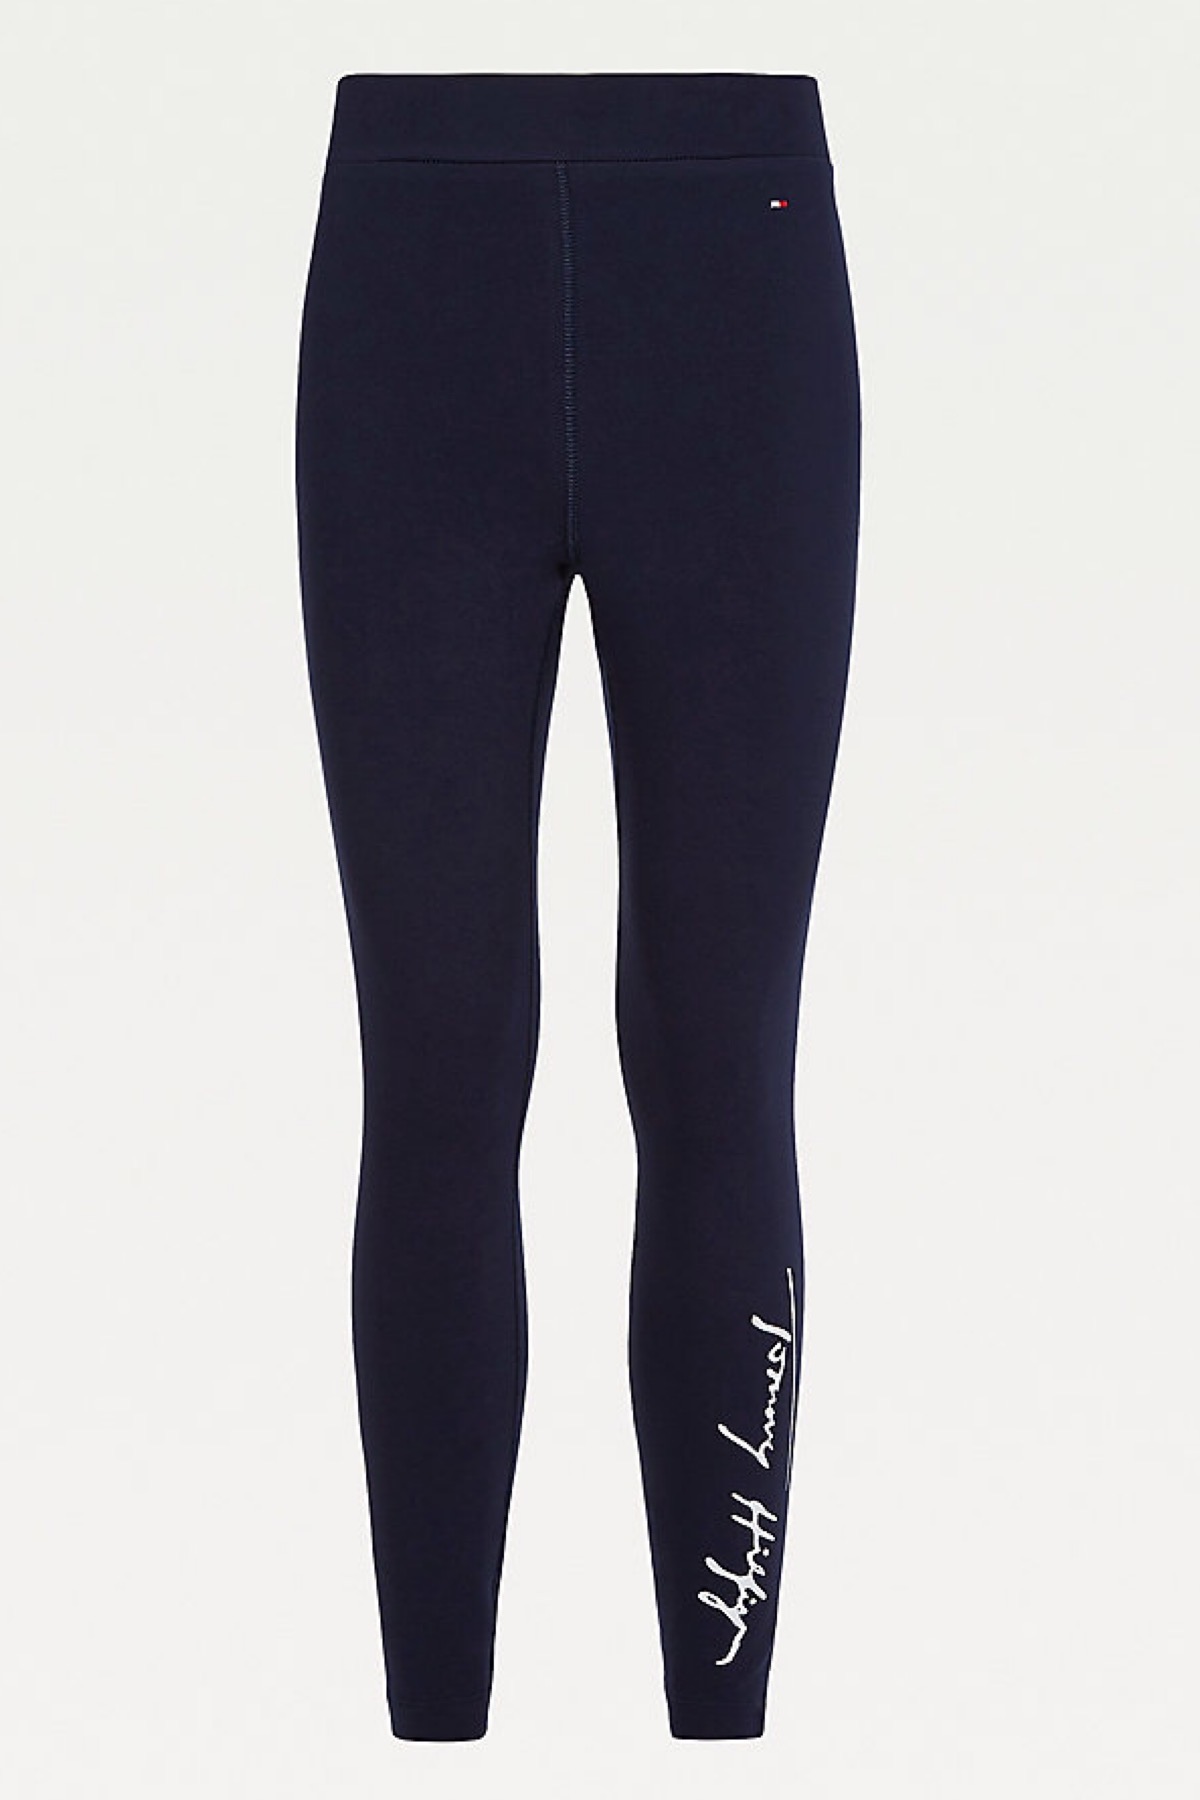 pantalone Tommy Hilfiger leggings con logo nero 30977